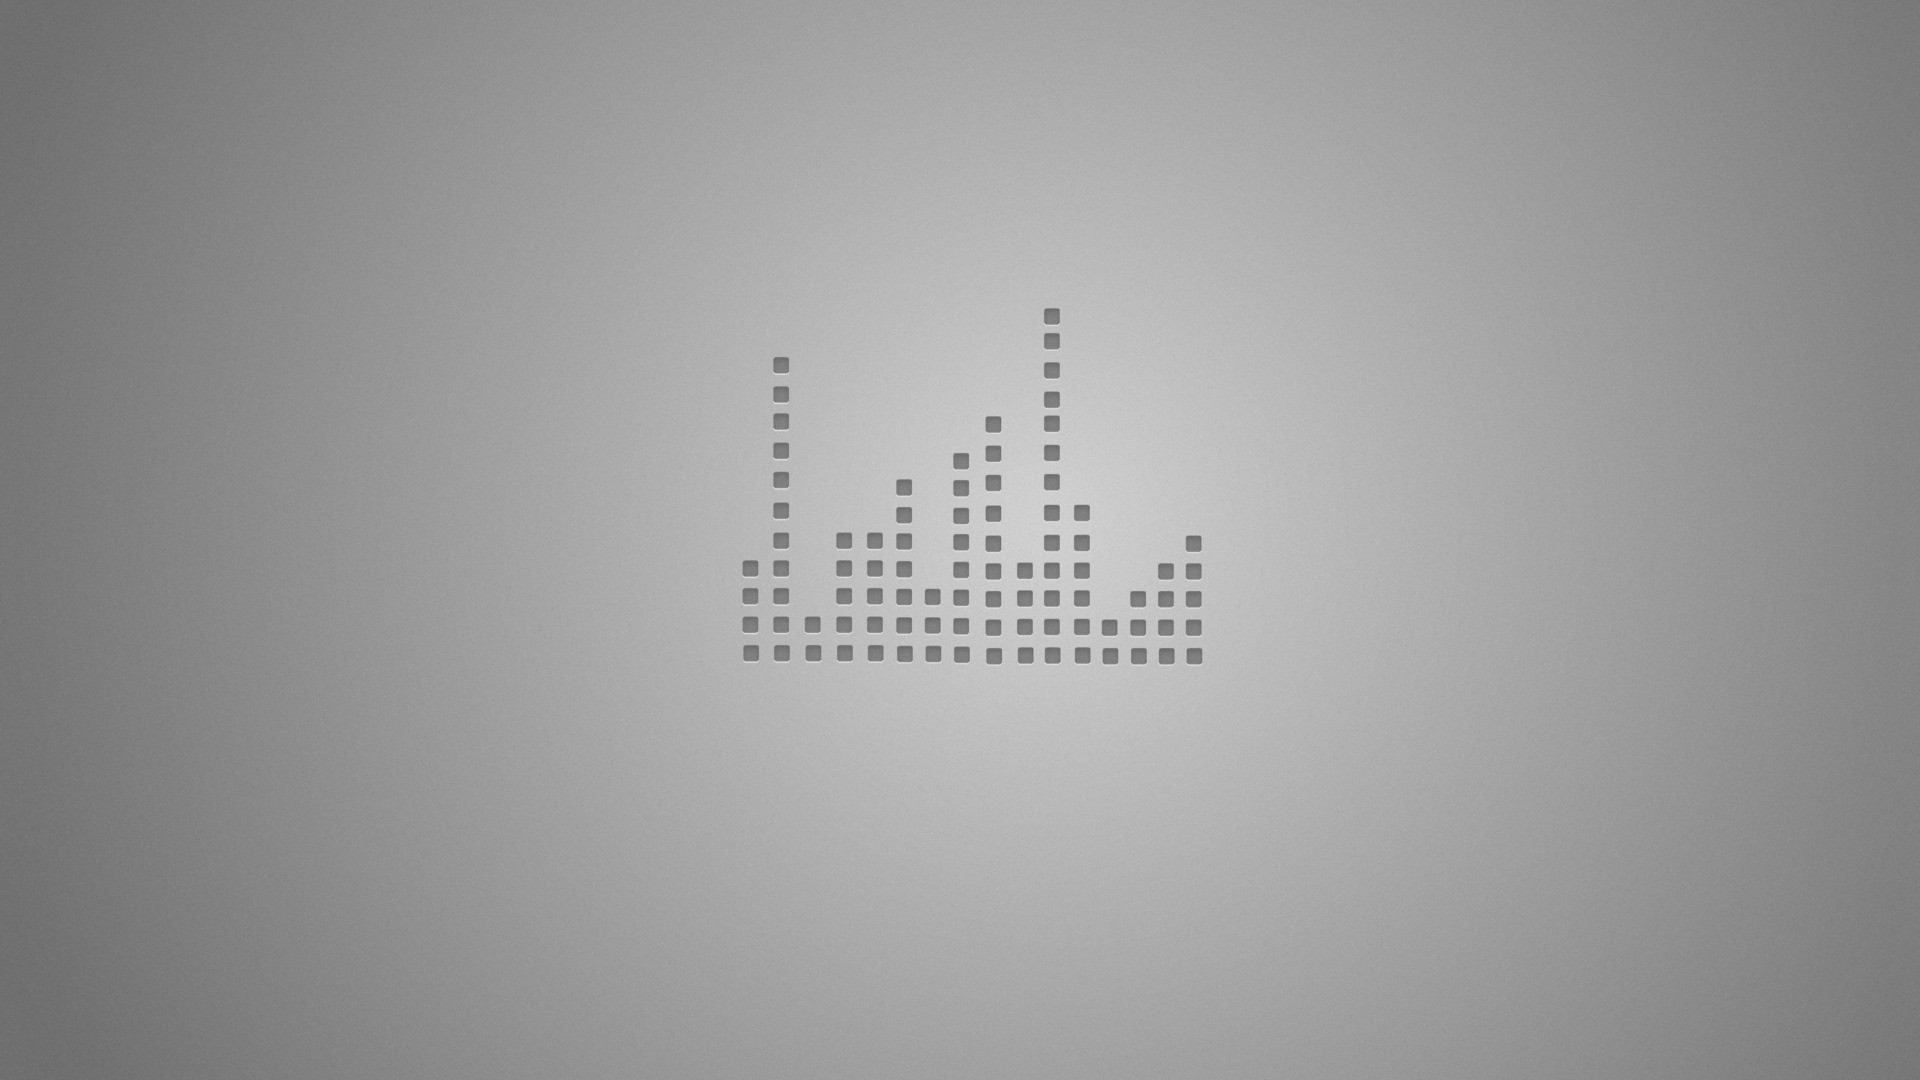 General 1920x1080 audio spectrum minimalism simple background monochrome gray